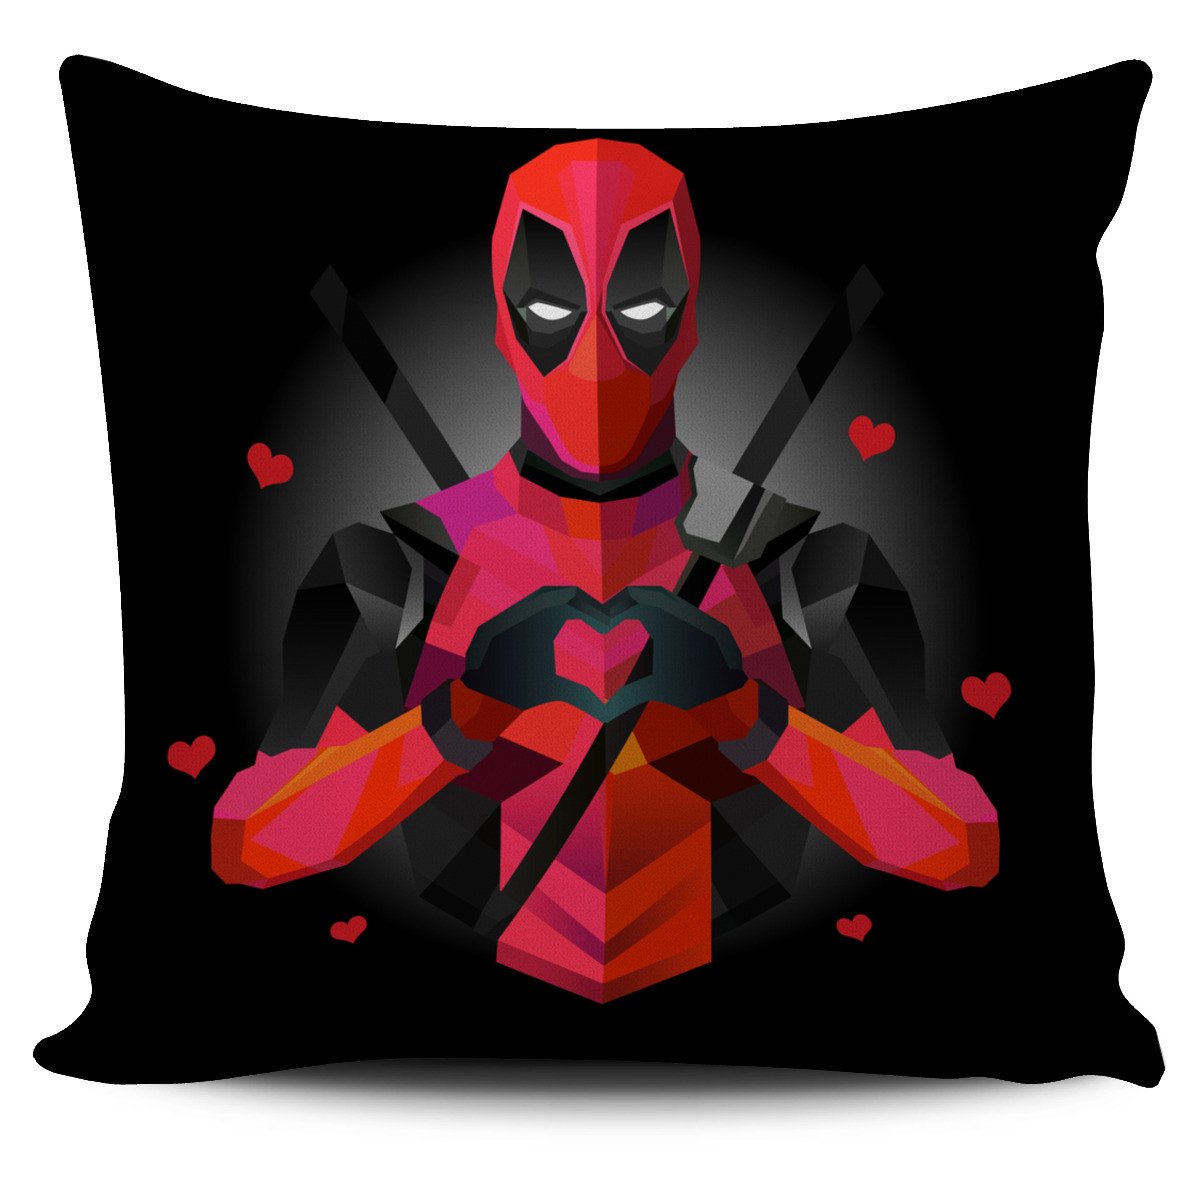 Deadpool Pillow Cover